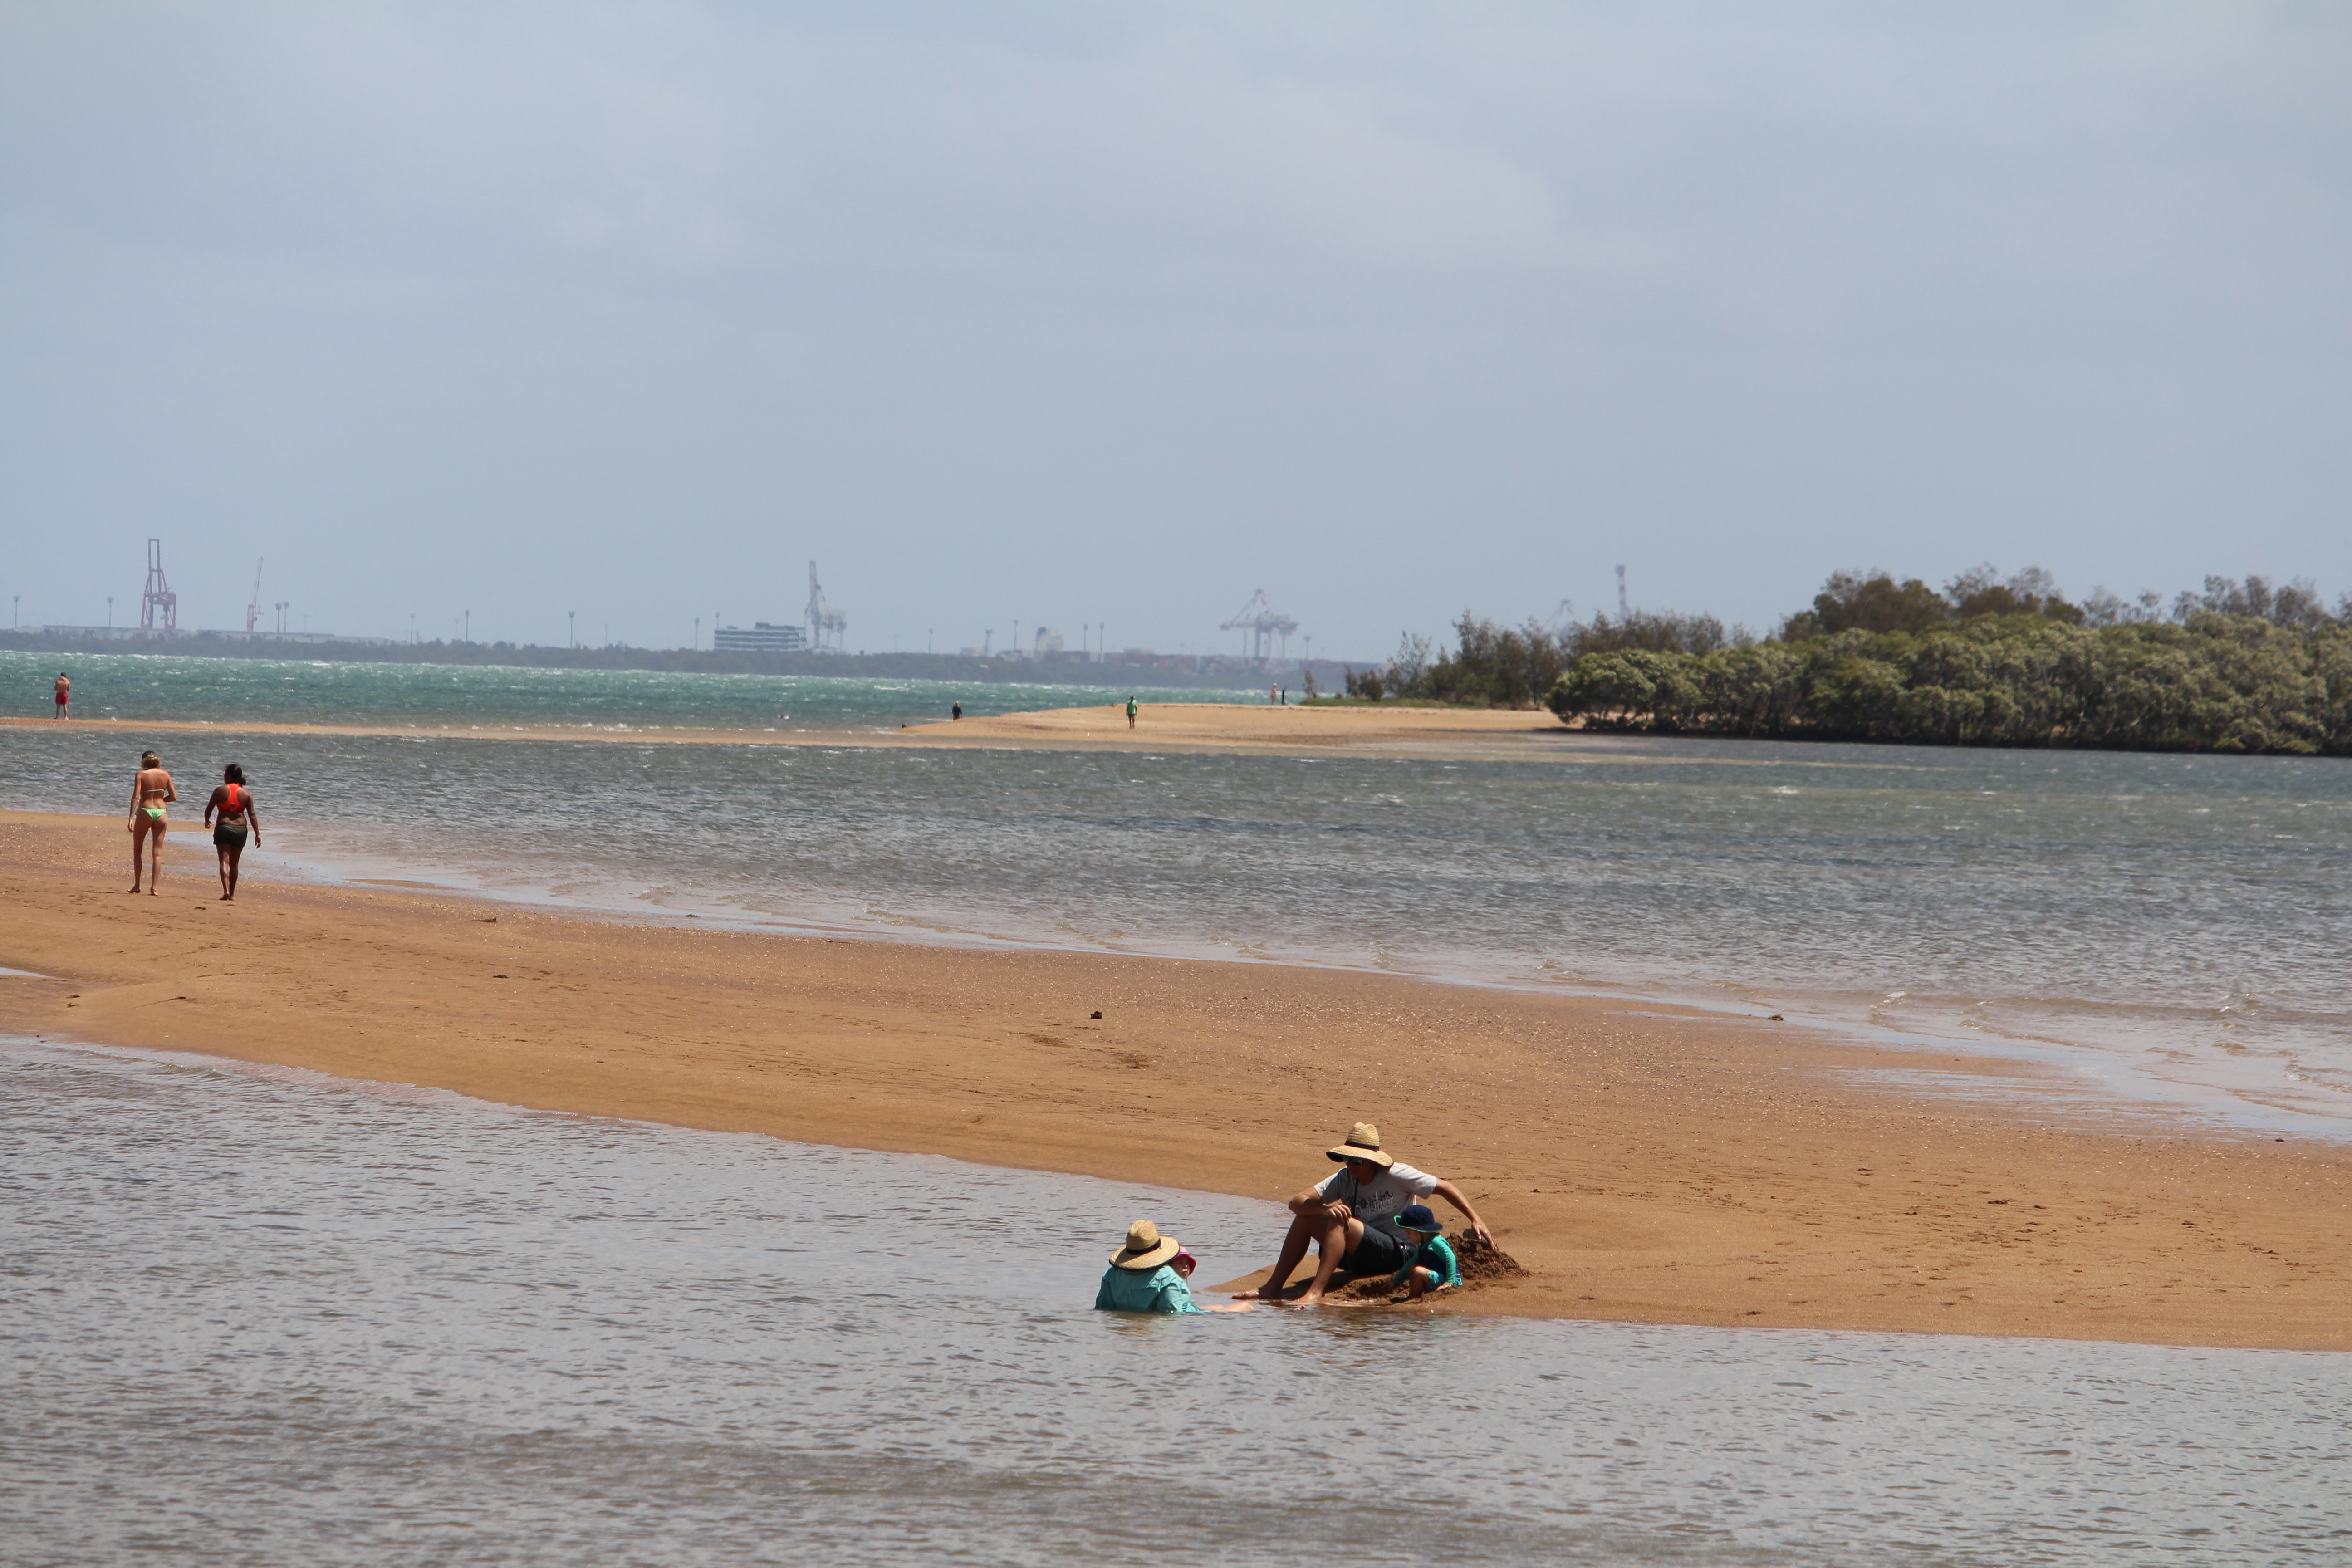 Day trips to enjoy in Moreton Bay Region, Queensland